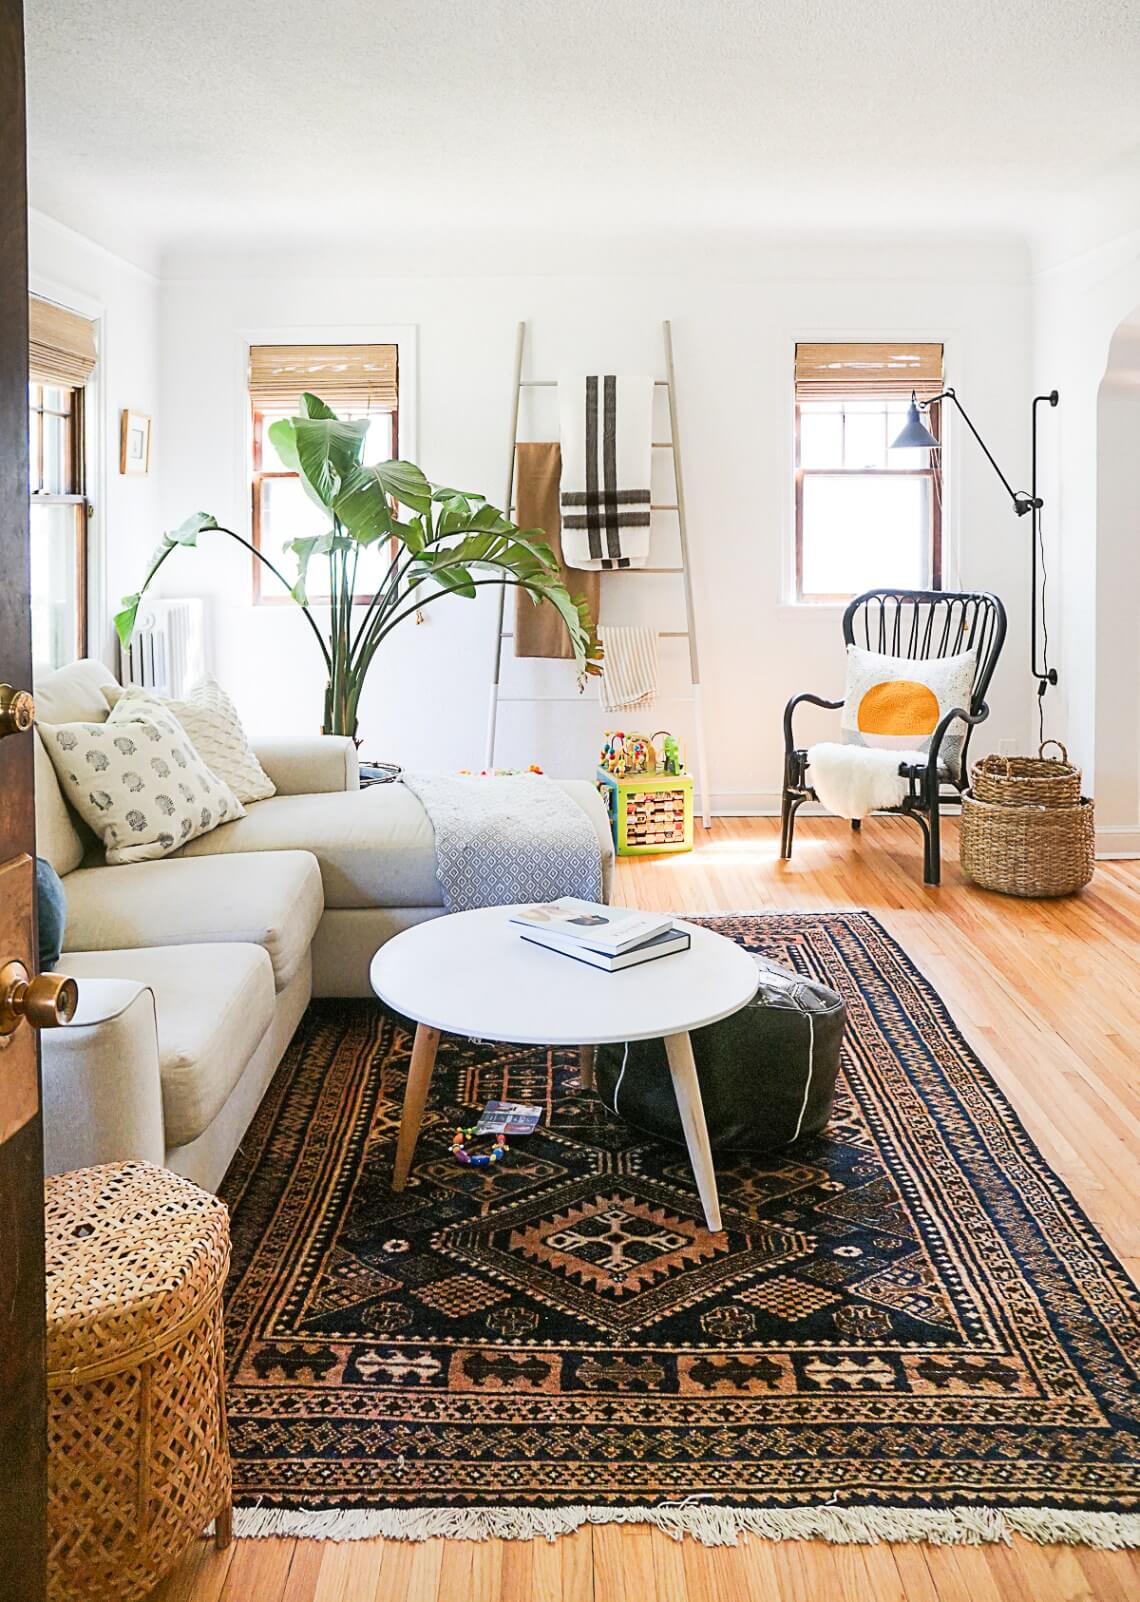 21 Best Vintage Living Room Decor and Design Ideas for 2020